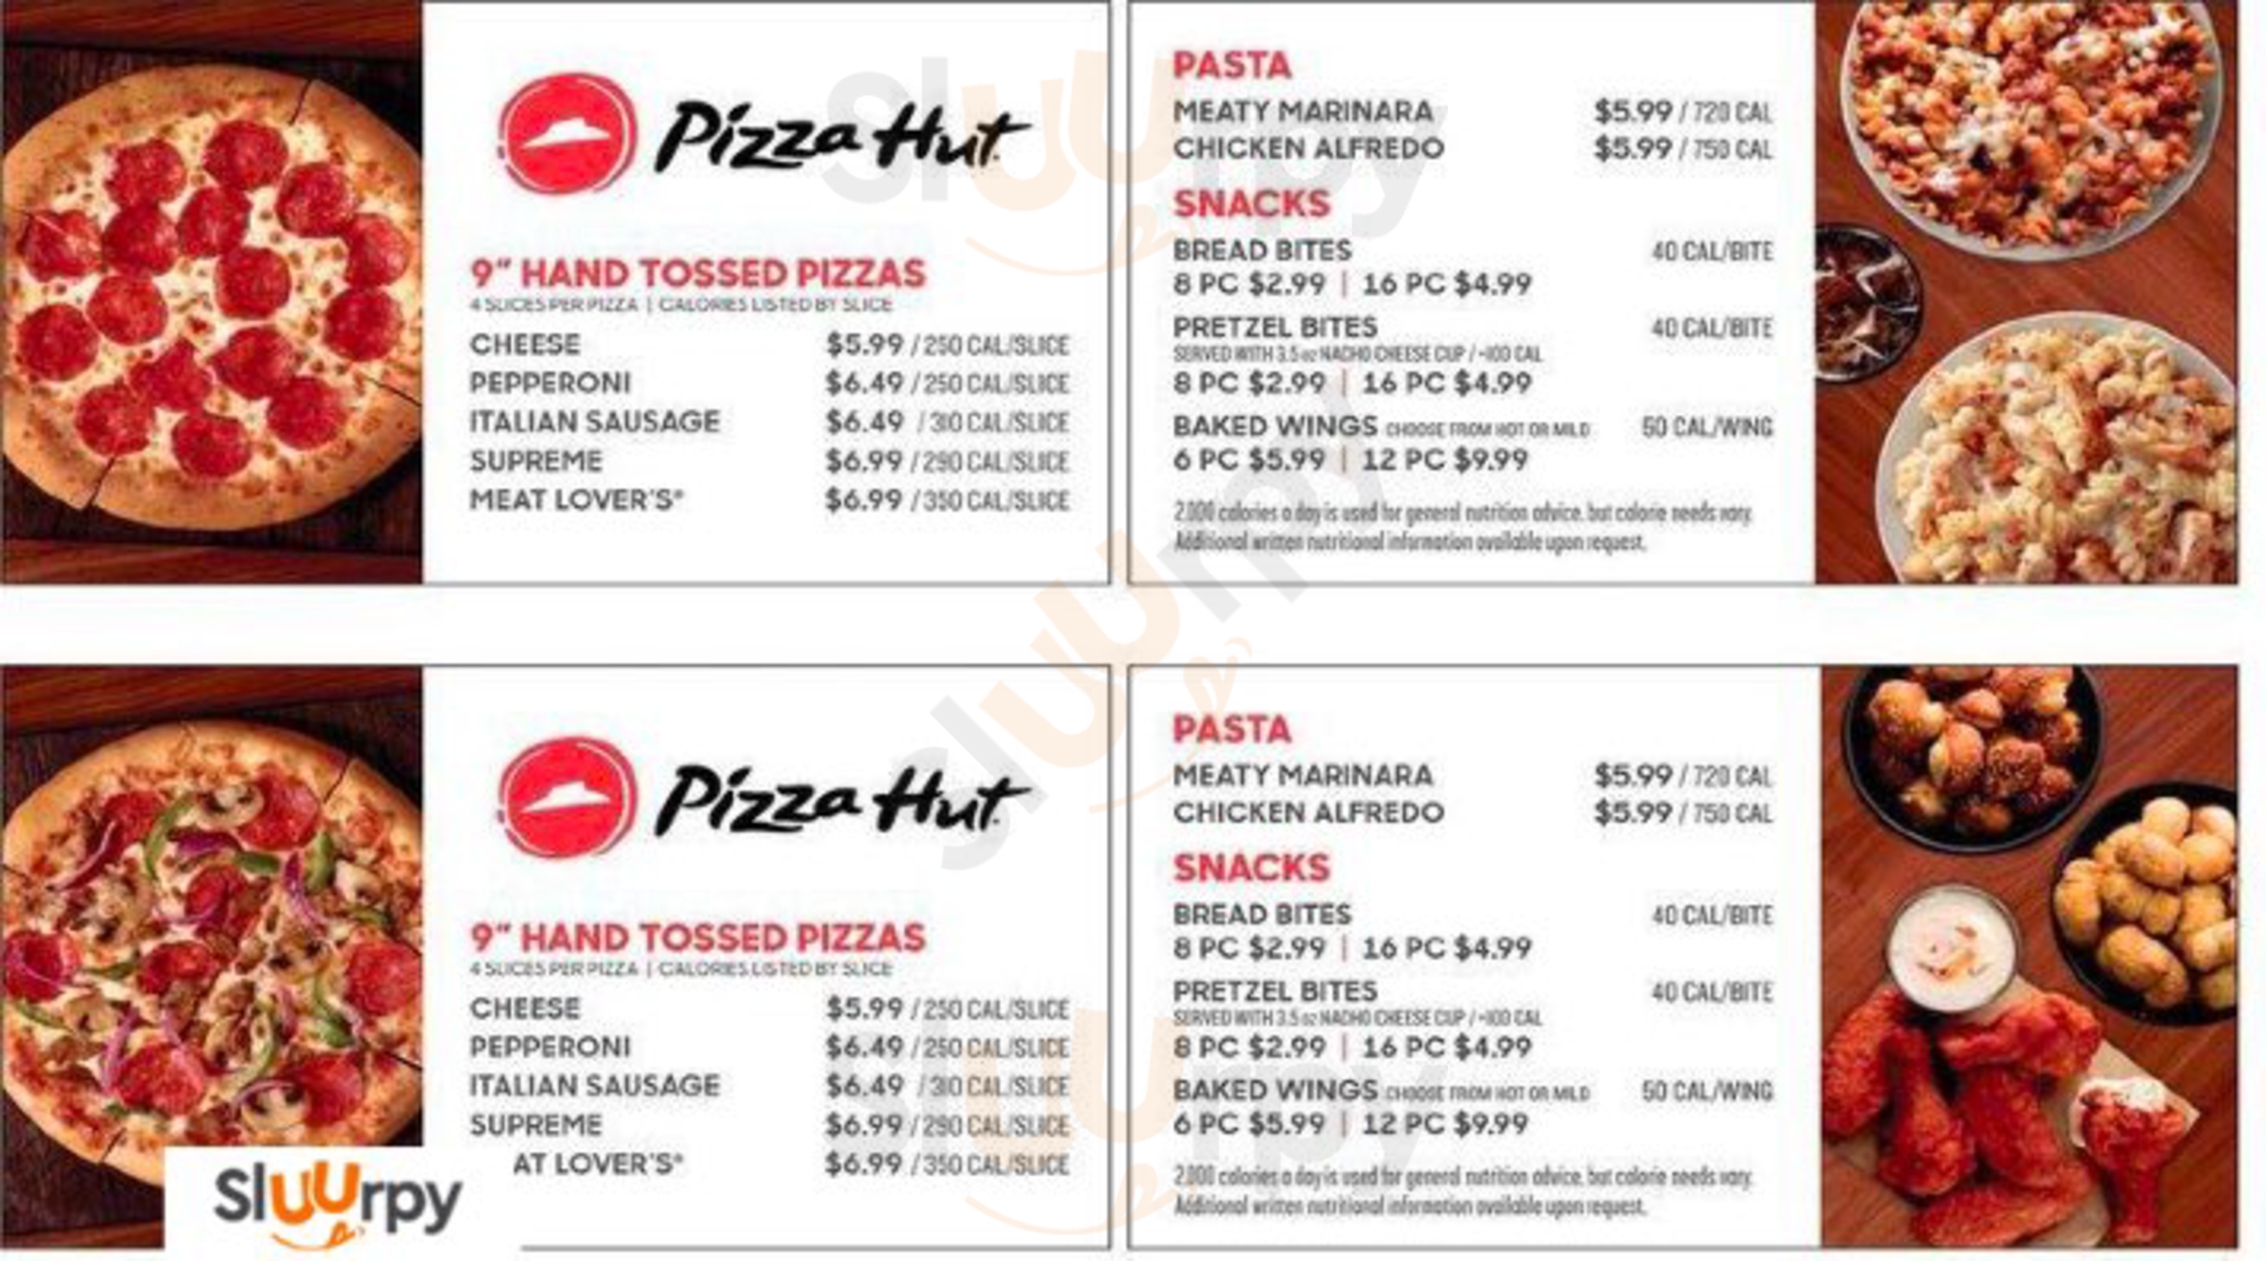 Pizza Hut Jacksonville Menu - 1